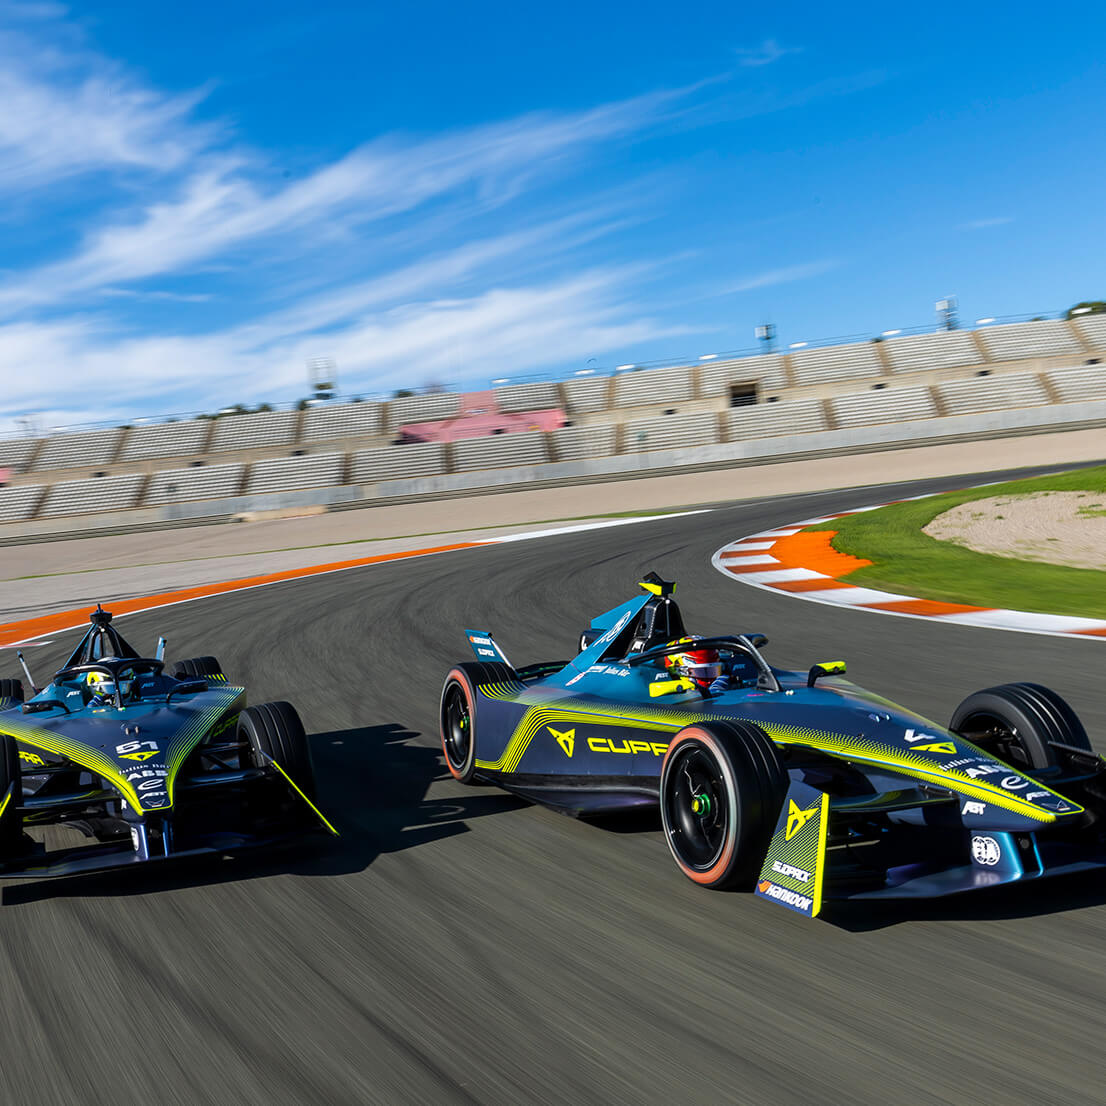 Two CUPRA Formula Es driving around a racetrack